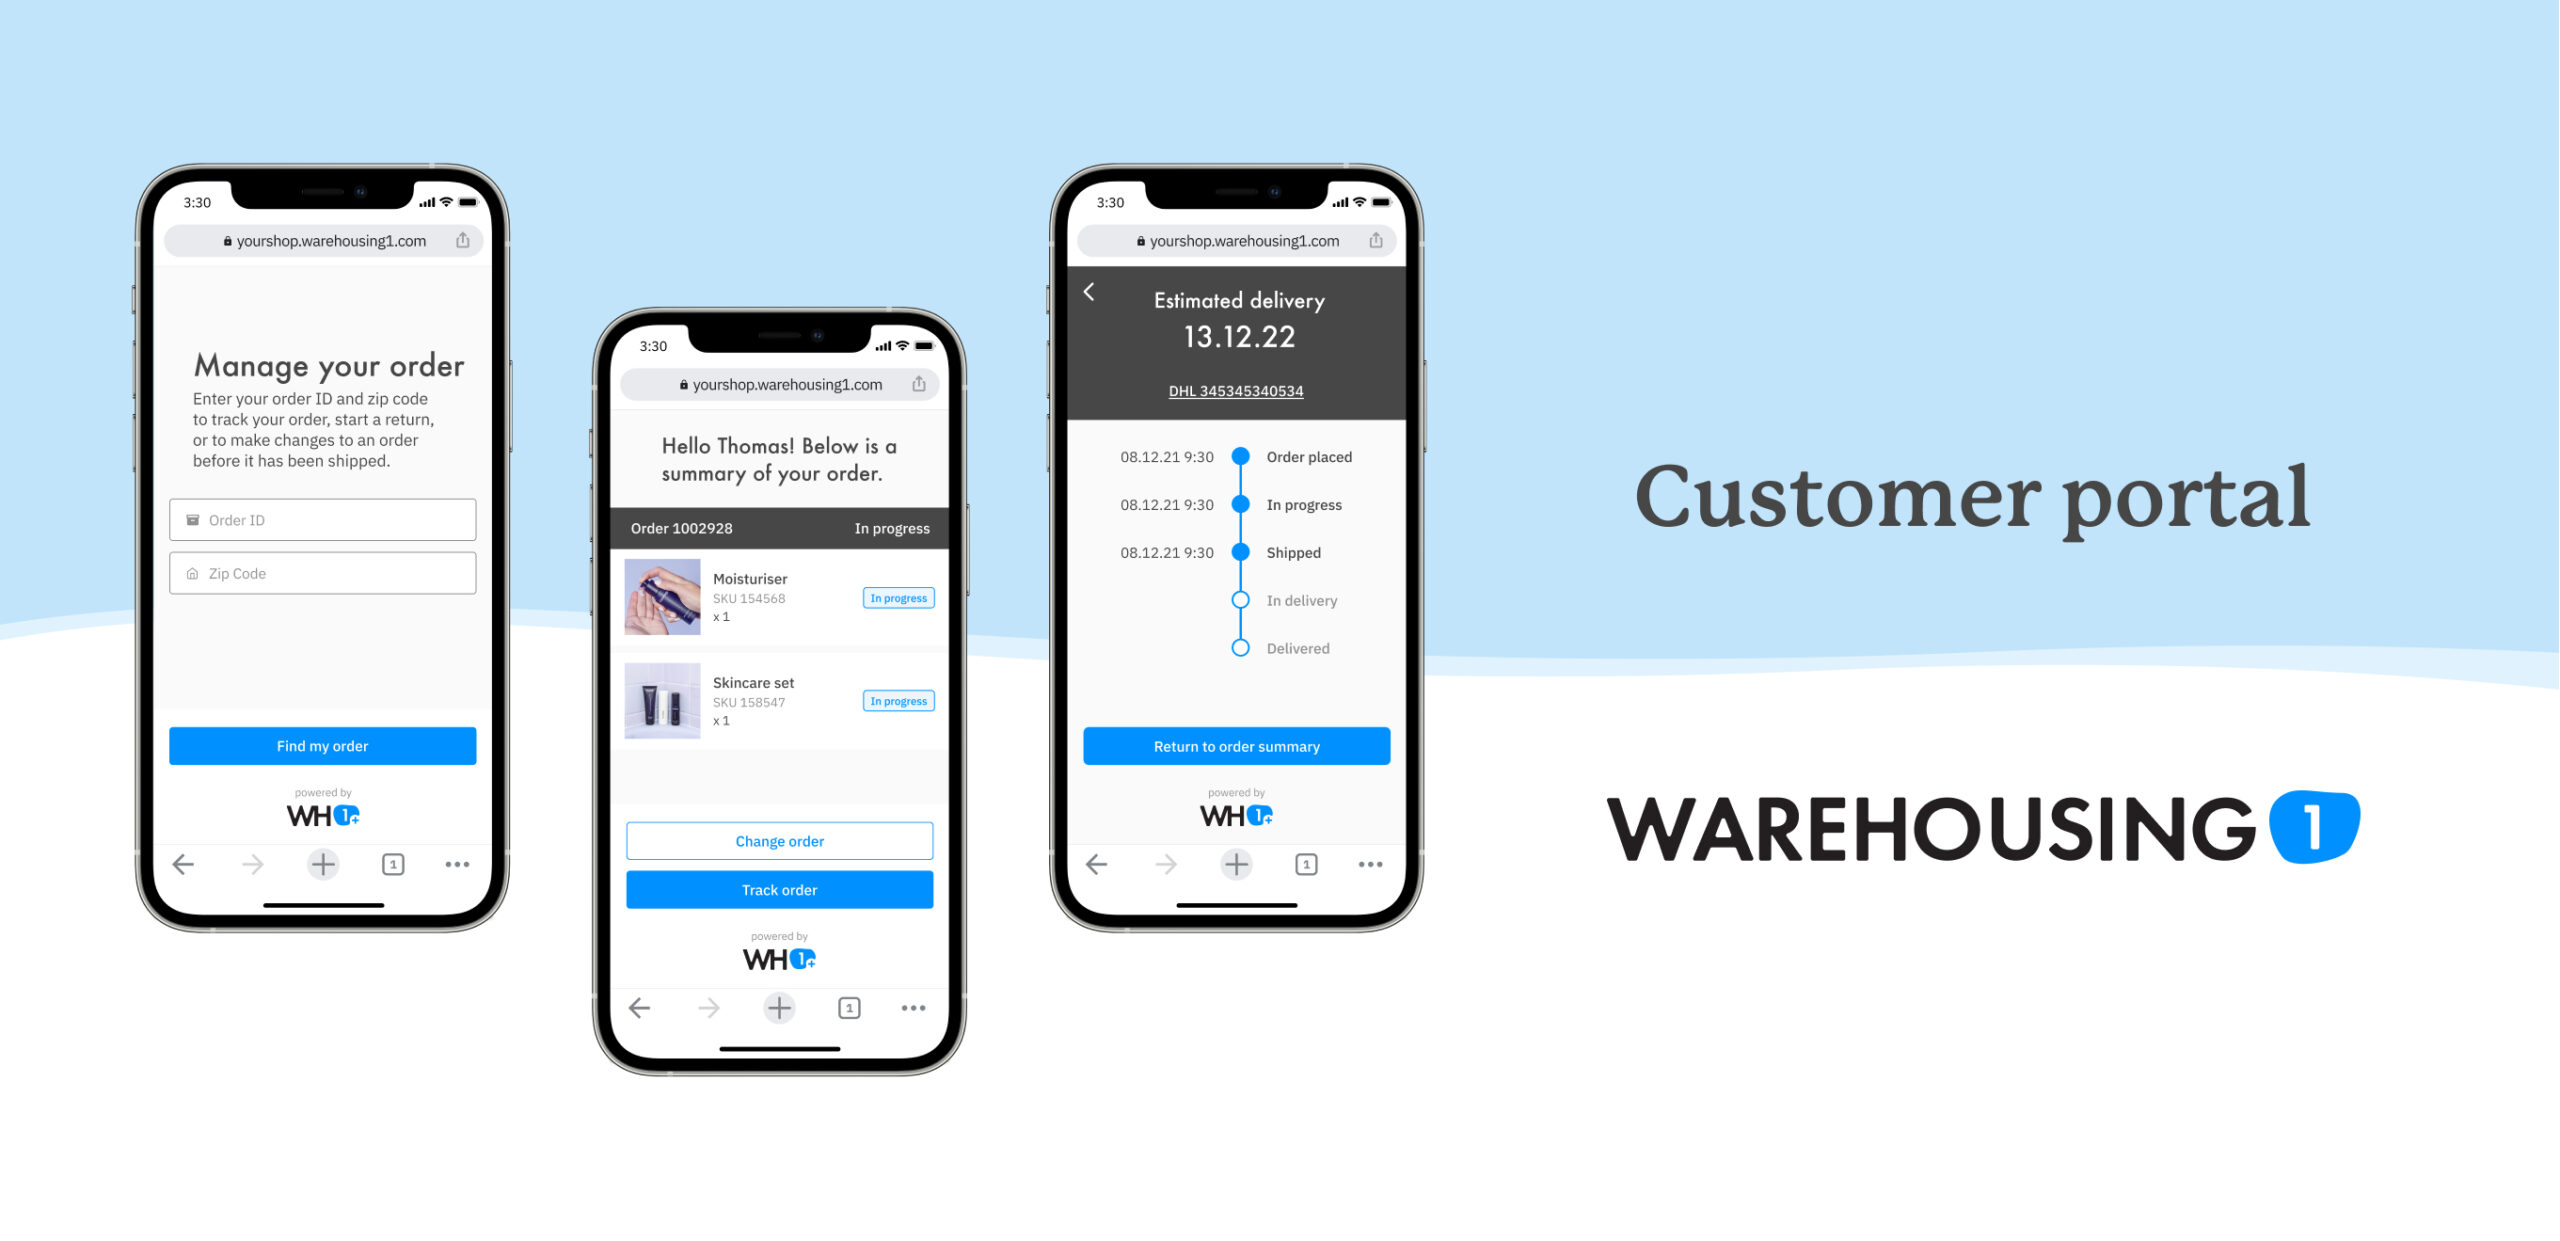 The WH1 customer portal 